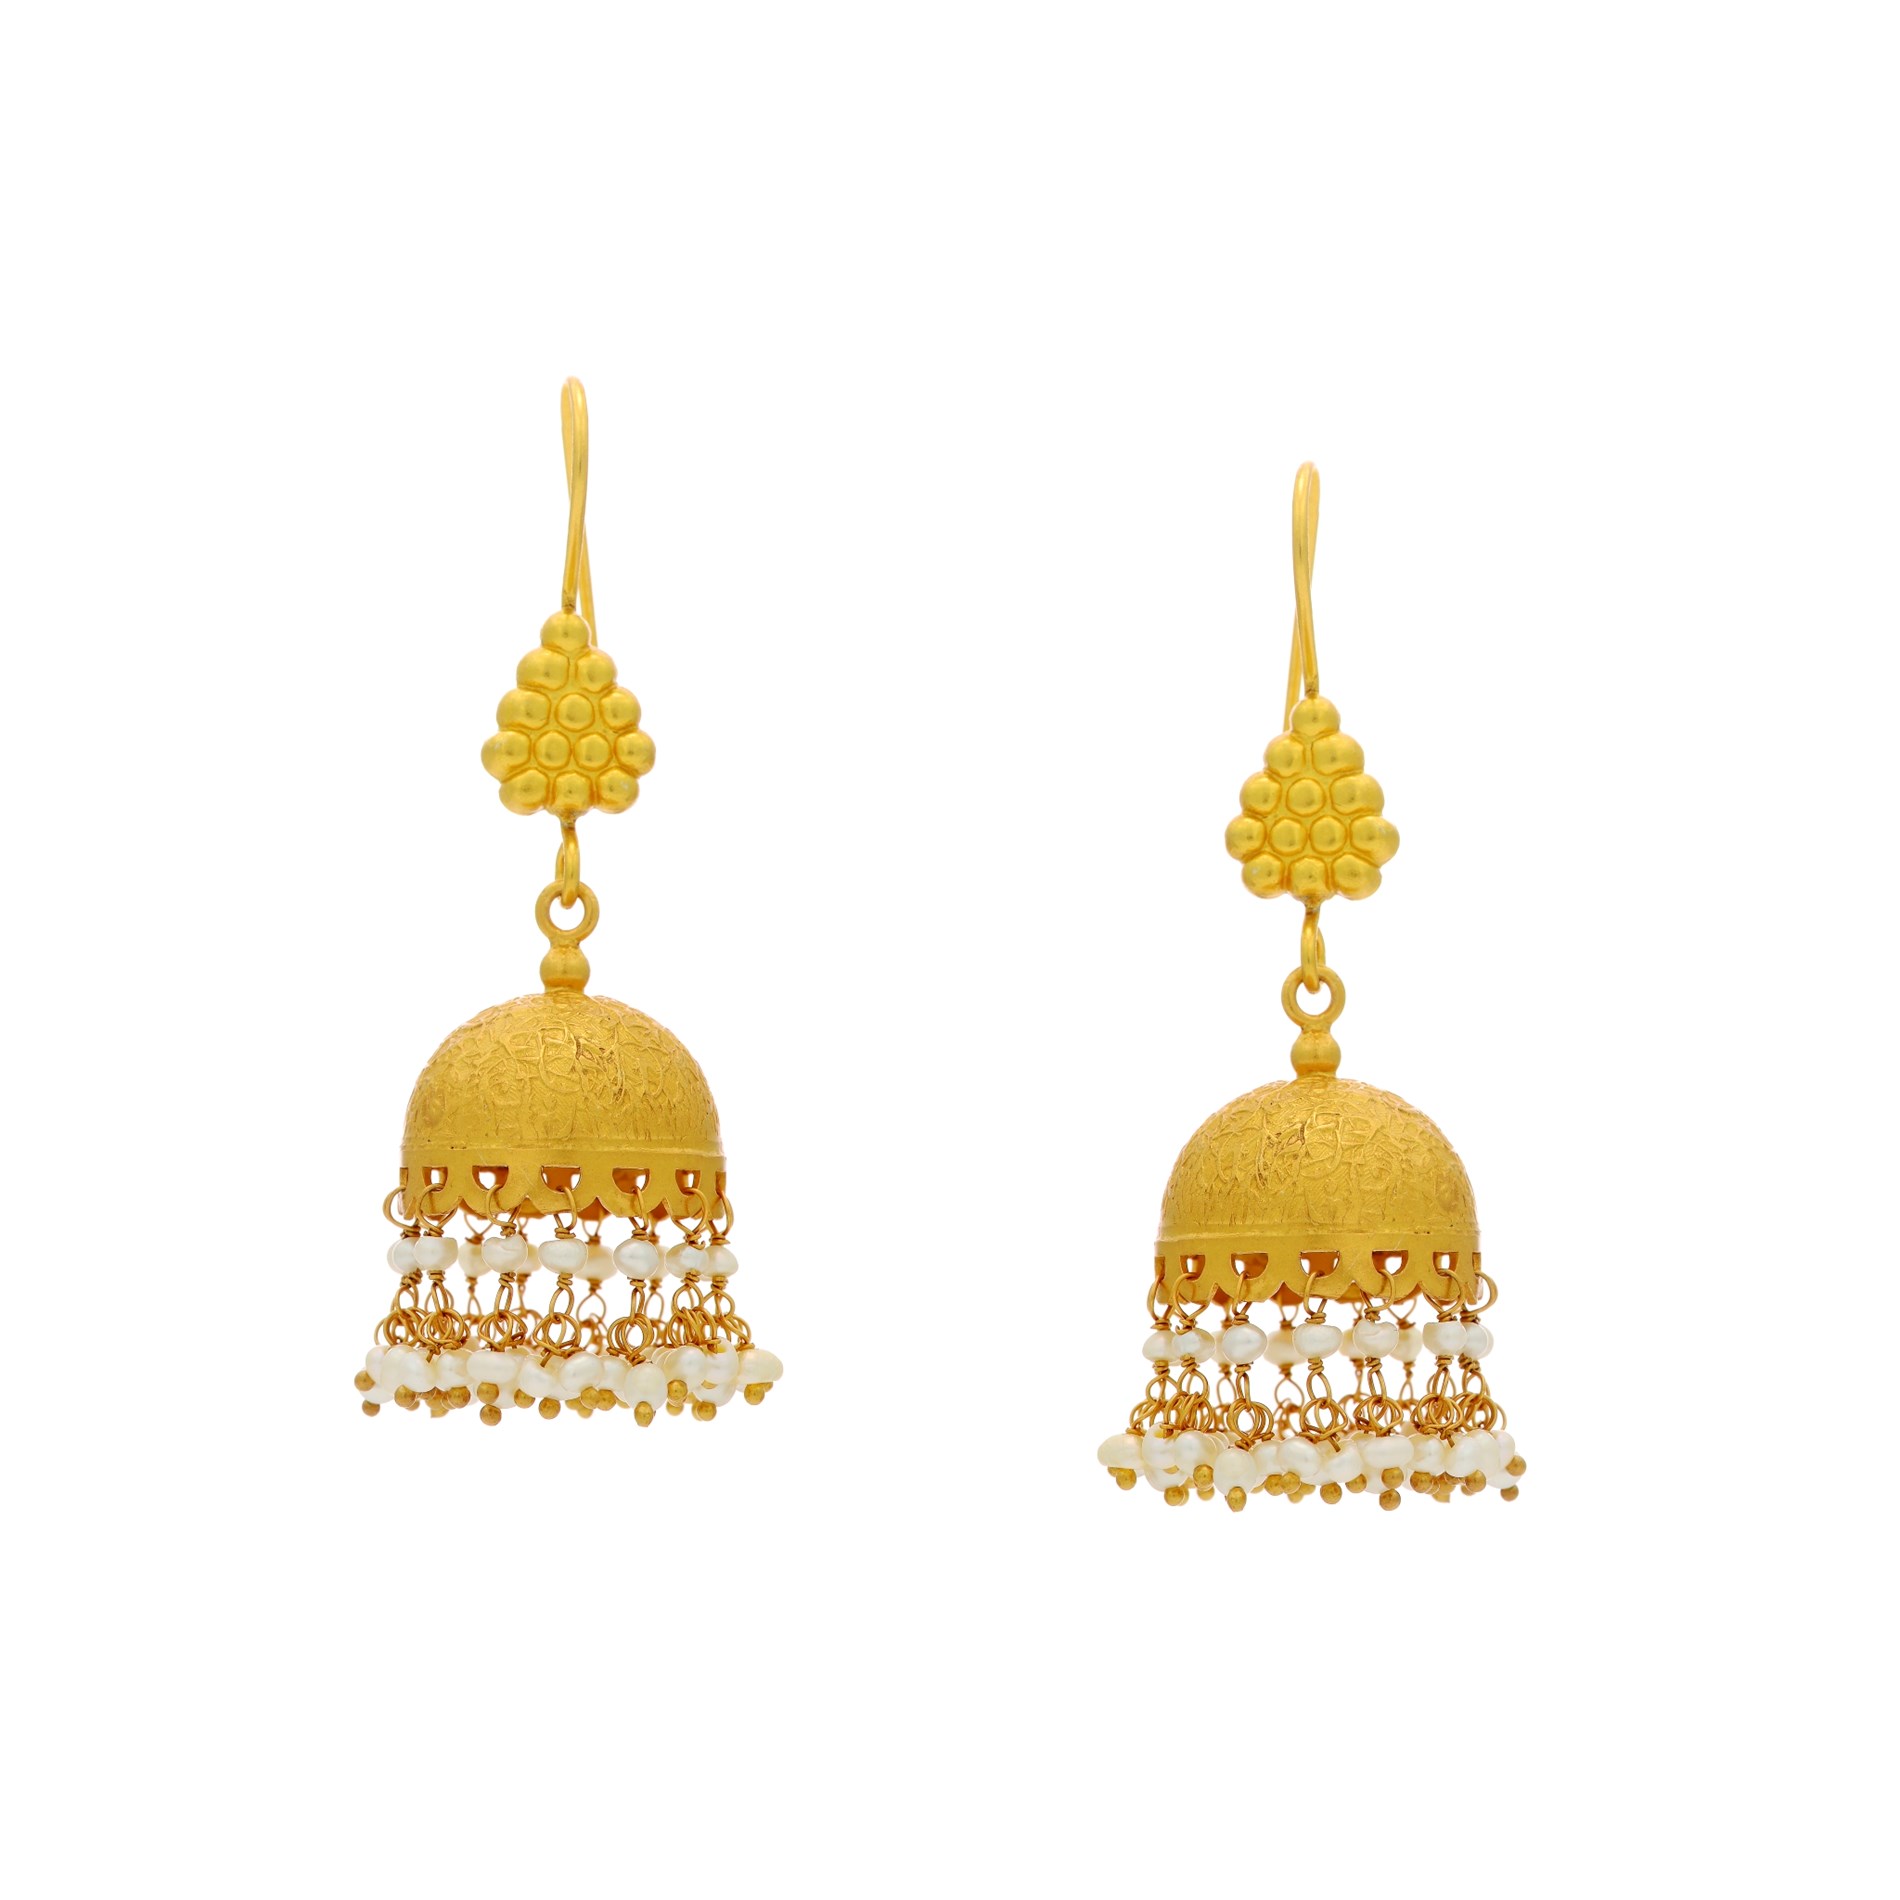 Buy White Pearl Hanging Earrings online from Krishna Pearls